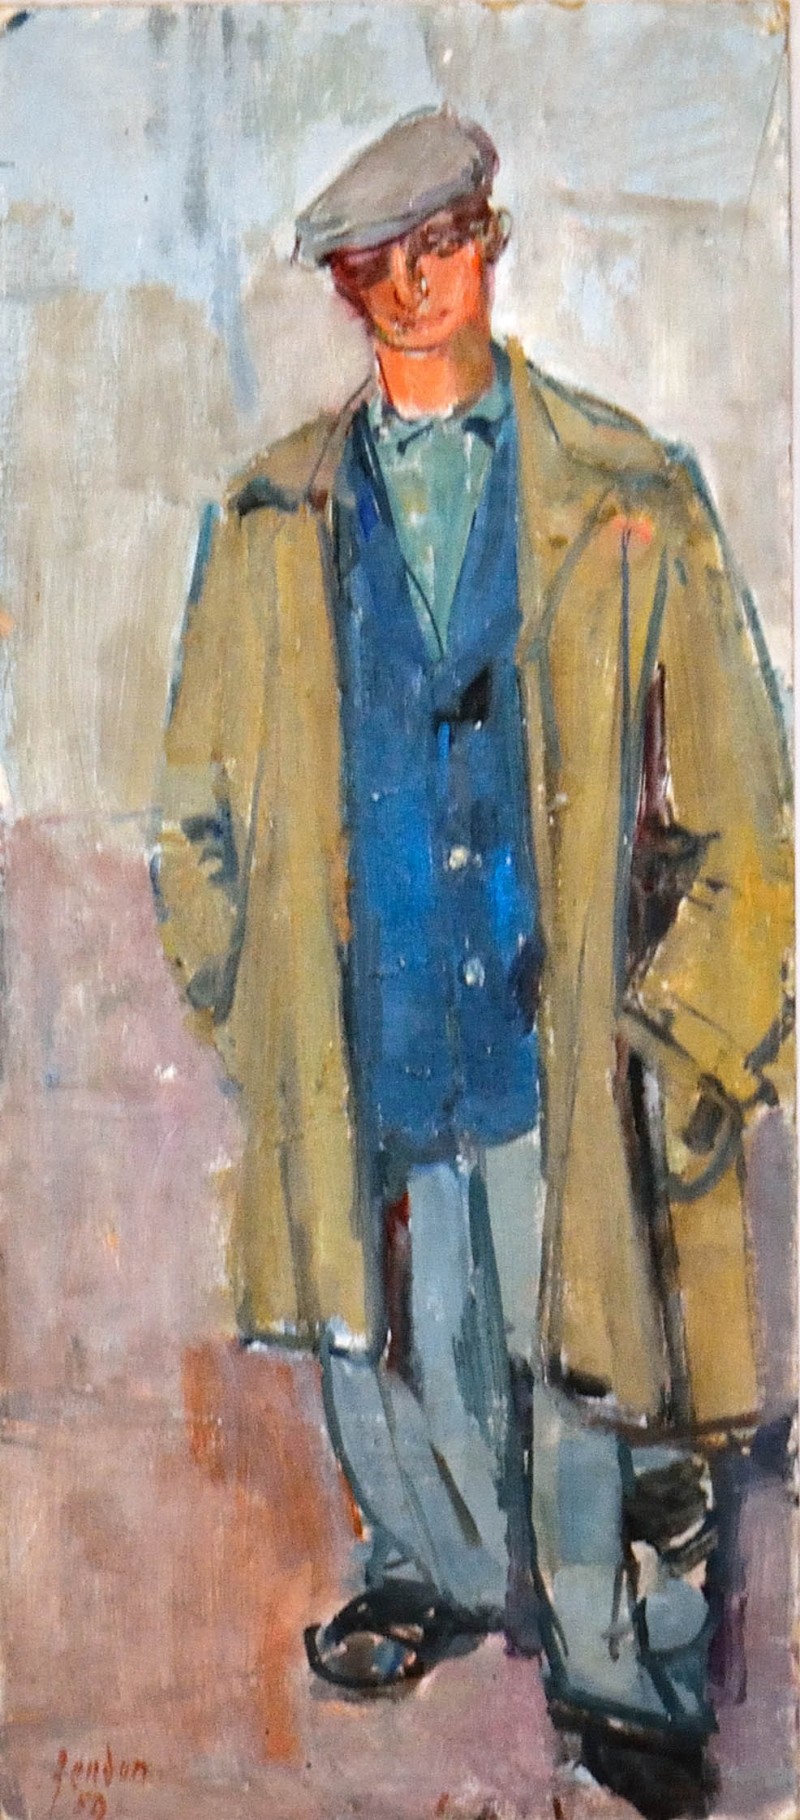 Le chomeur, 1959